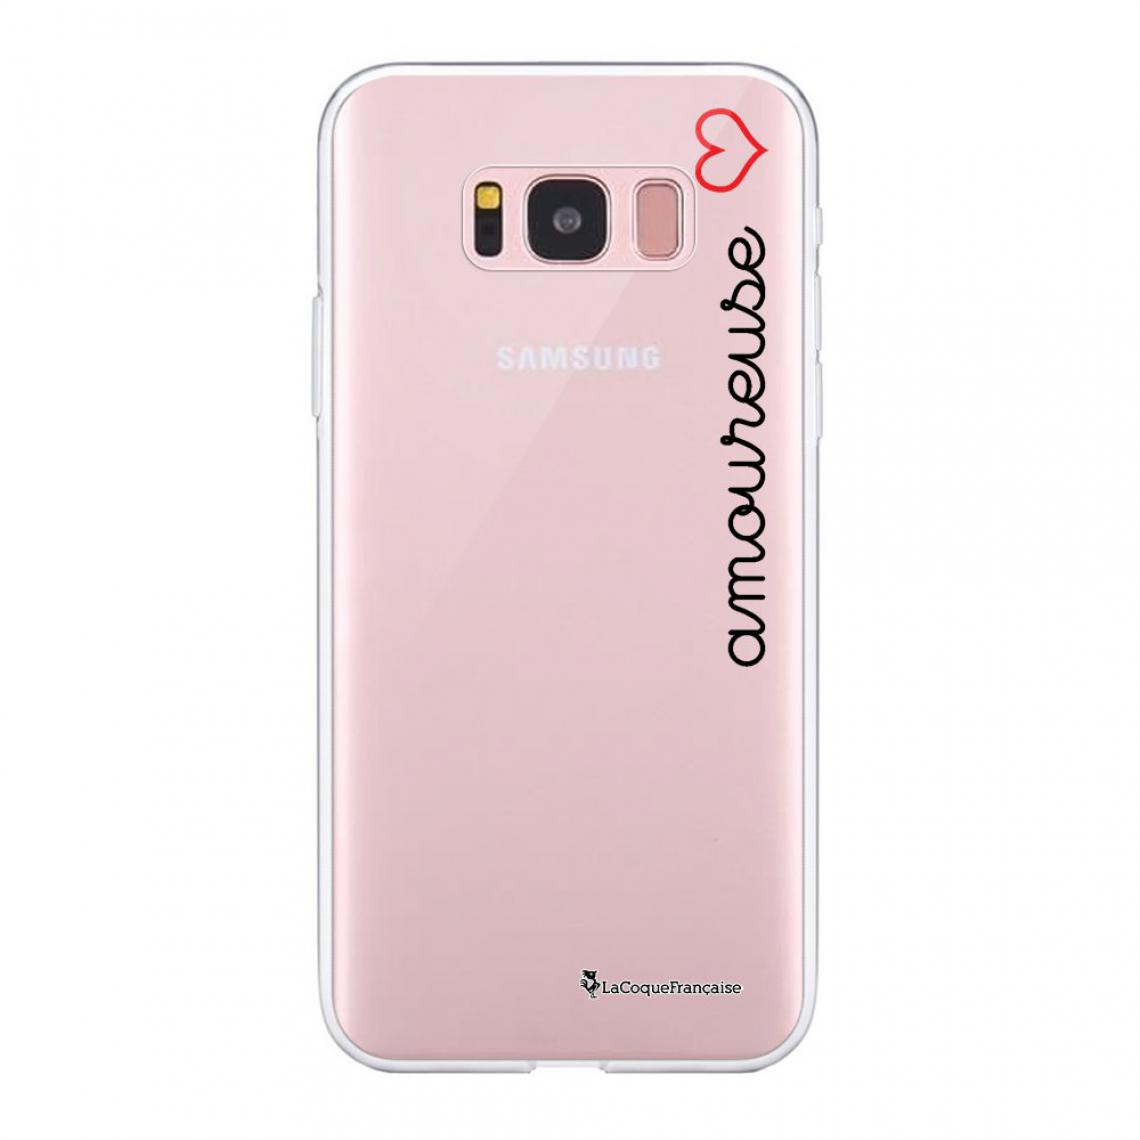 La Coque Francaise - Coque Samsung Galaxy S8 souple silicone transparente - Coque, étui smartphone